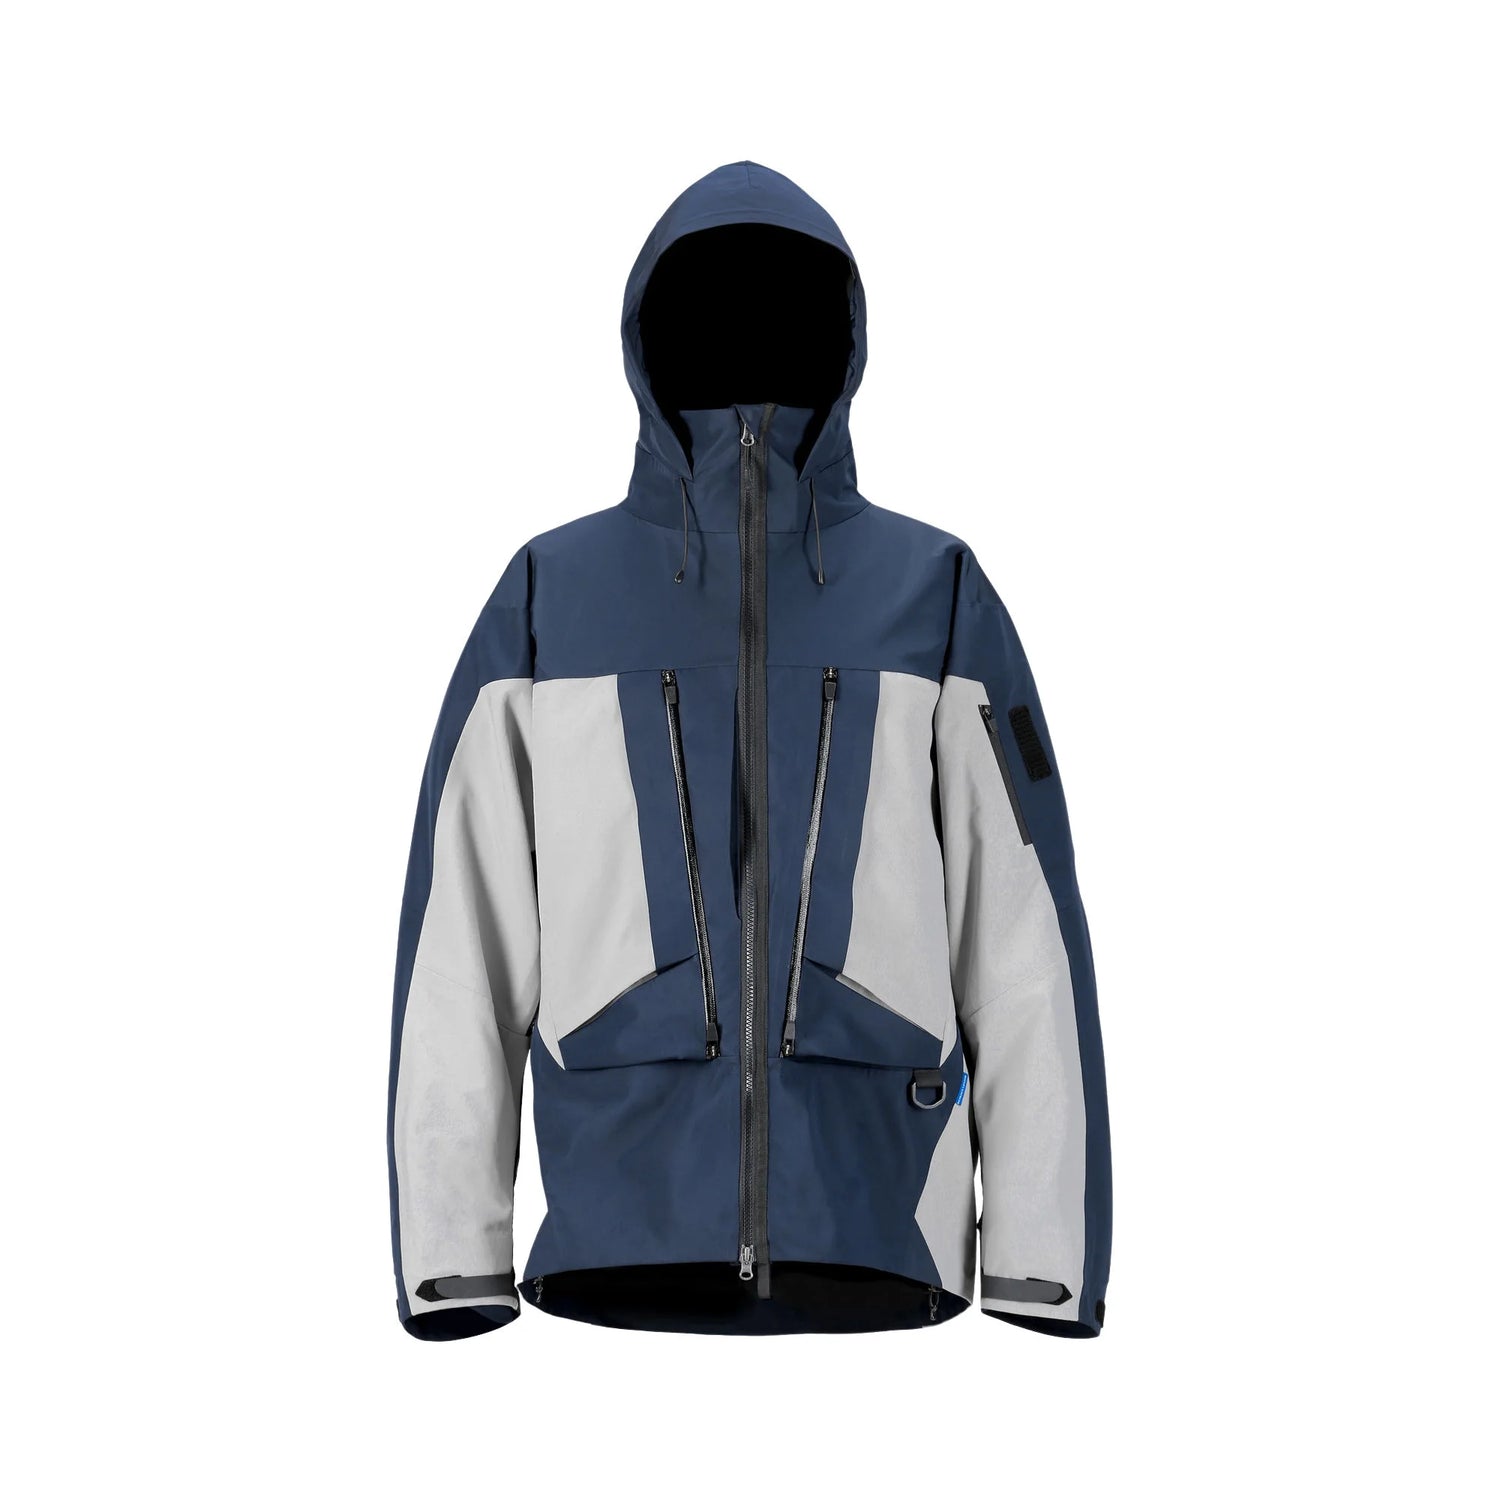 The 0107 Ski Down Techwear Jacket in Blue Color